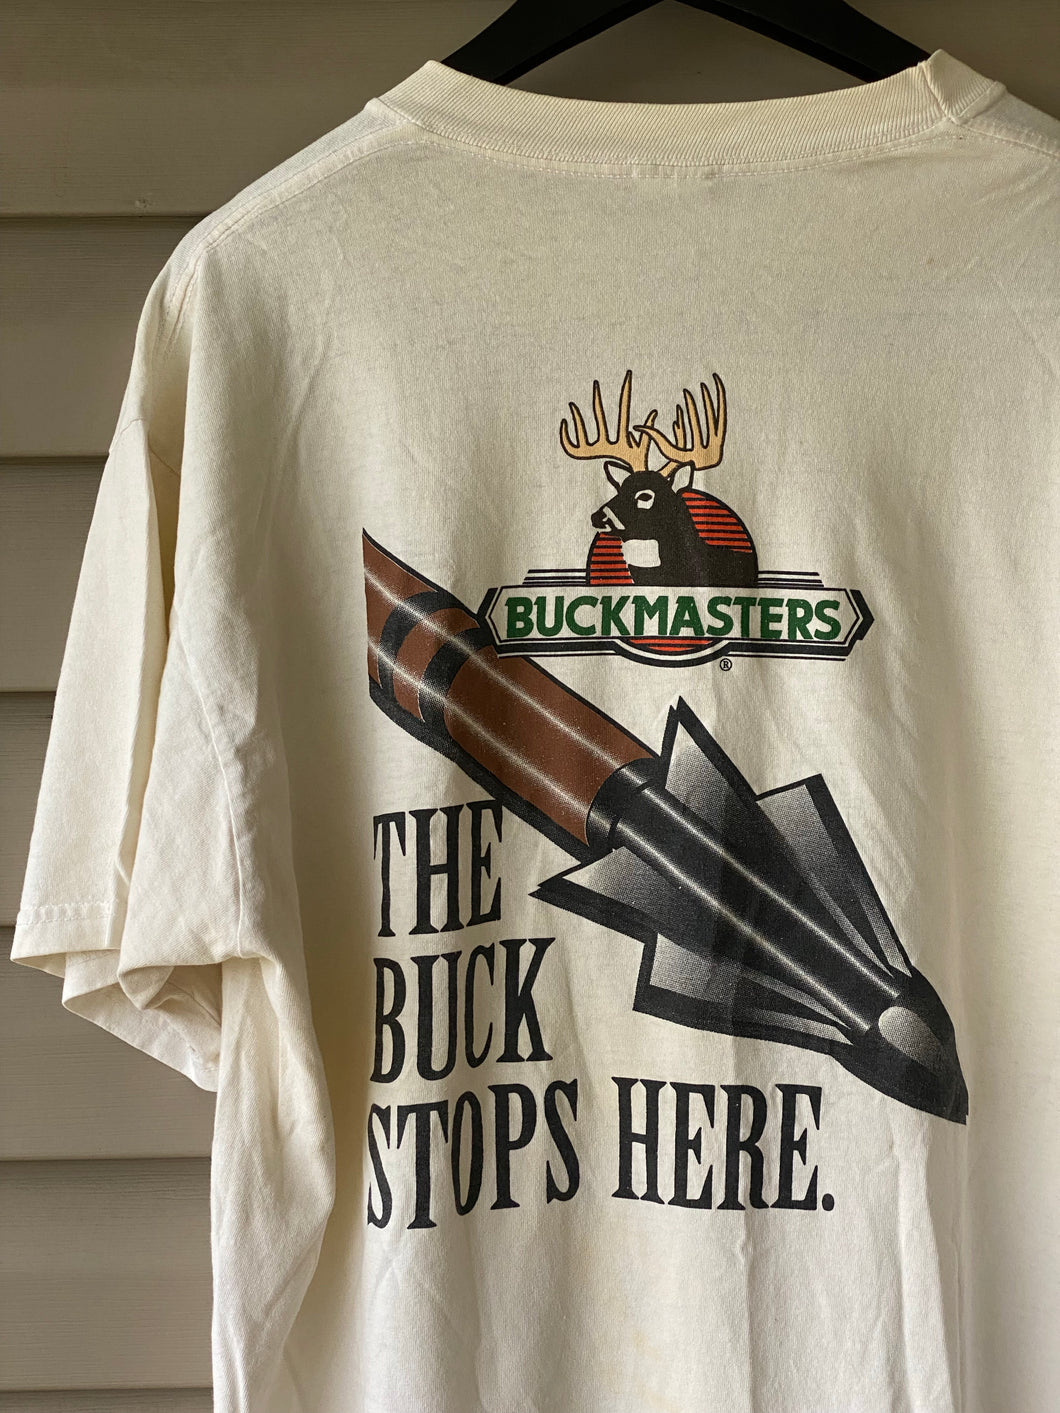 Buckmasters “The Buck Stops Here” Shirt (XL/XXL)🇺🇸